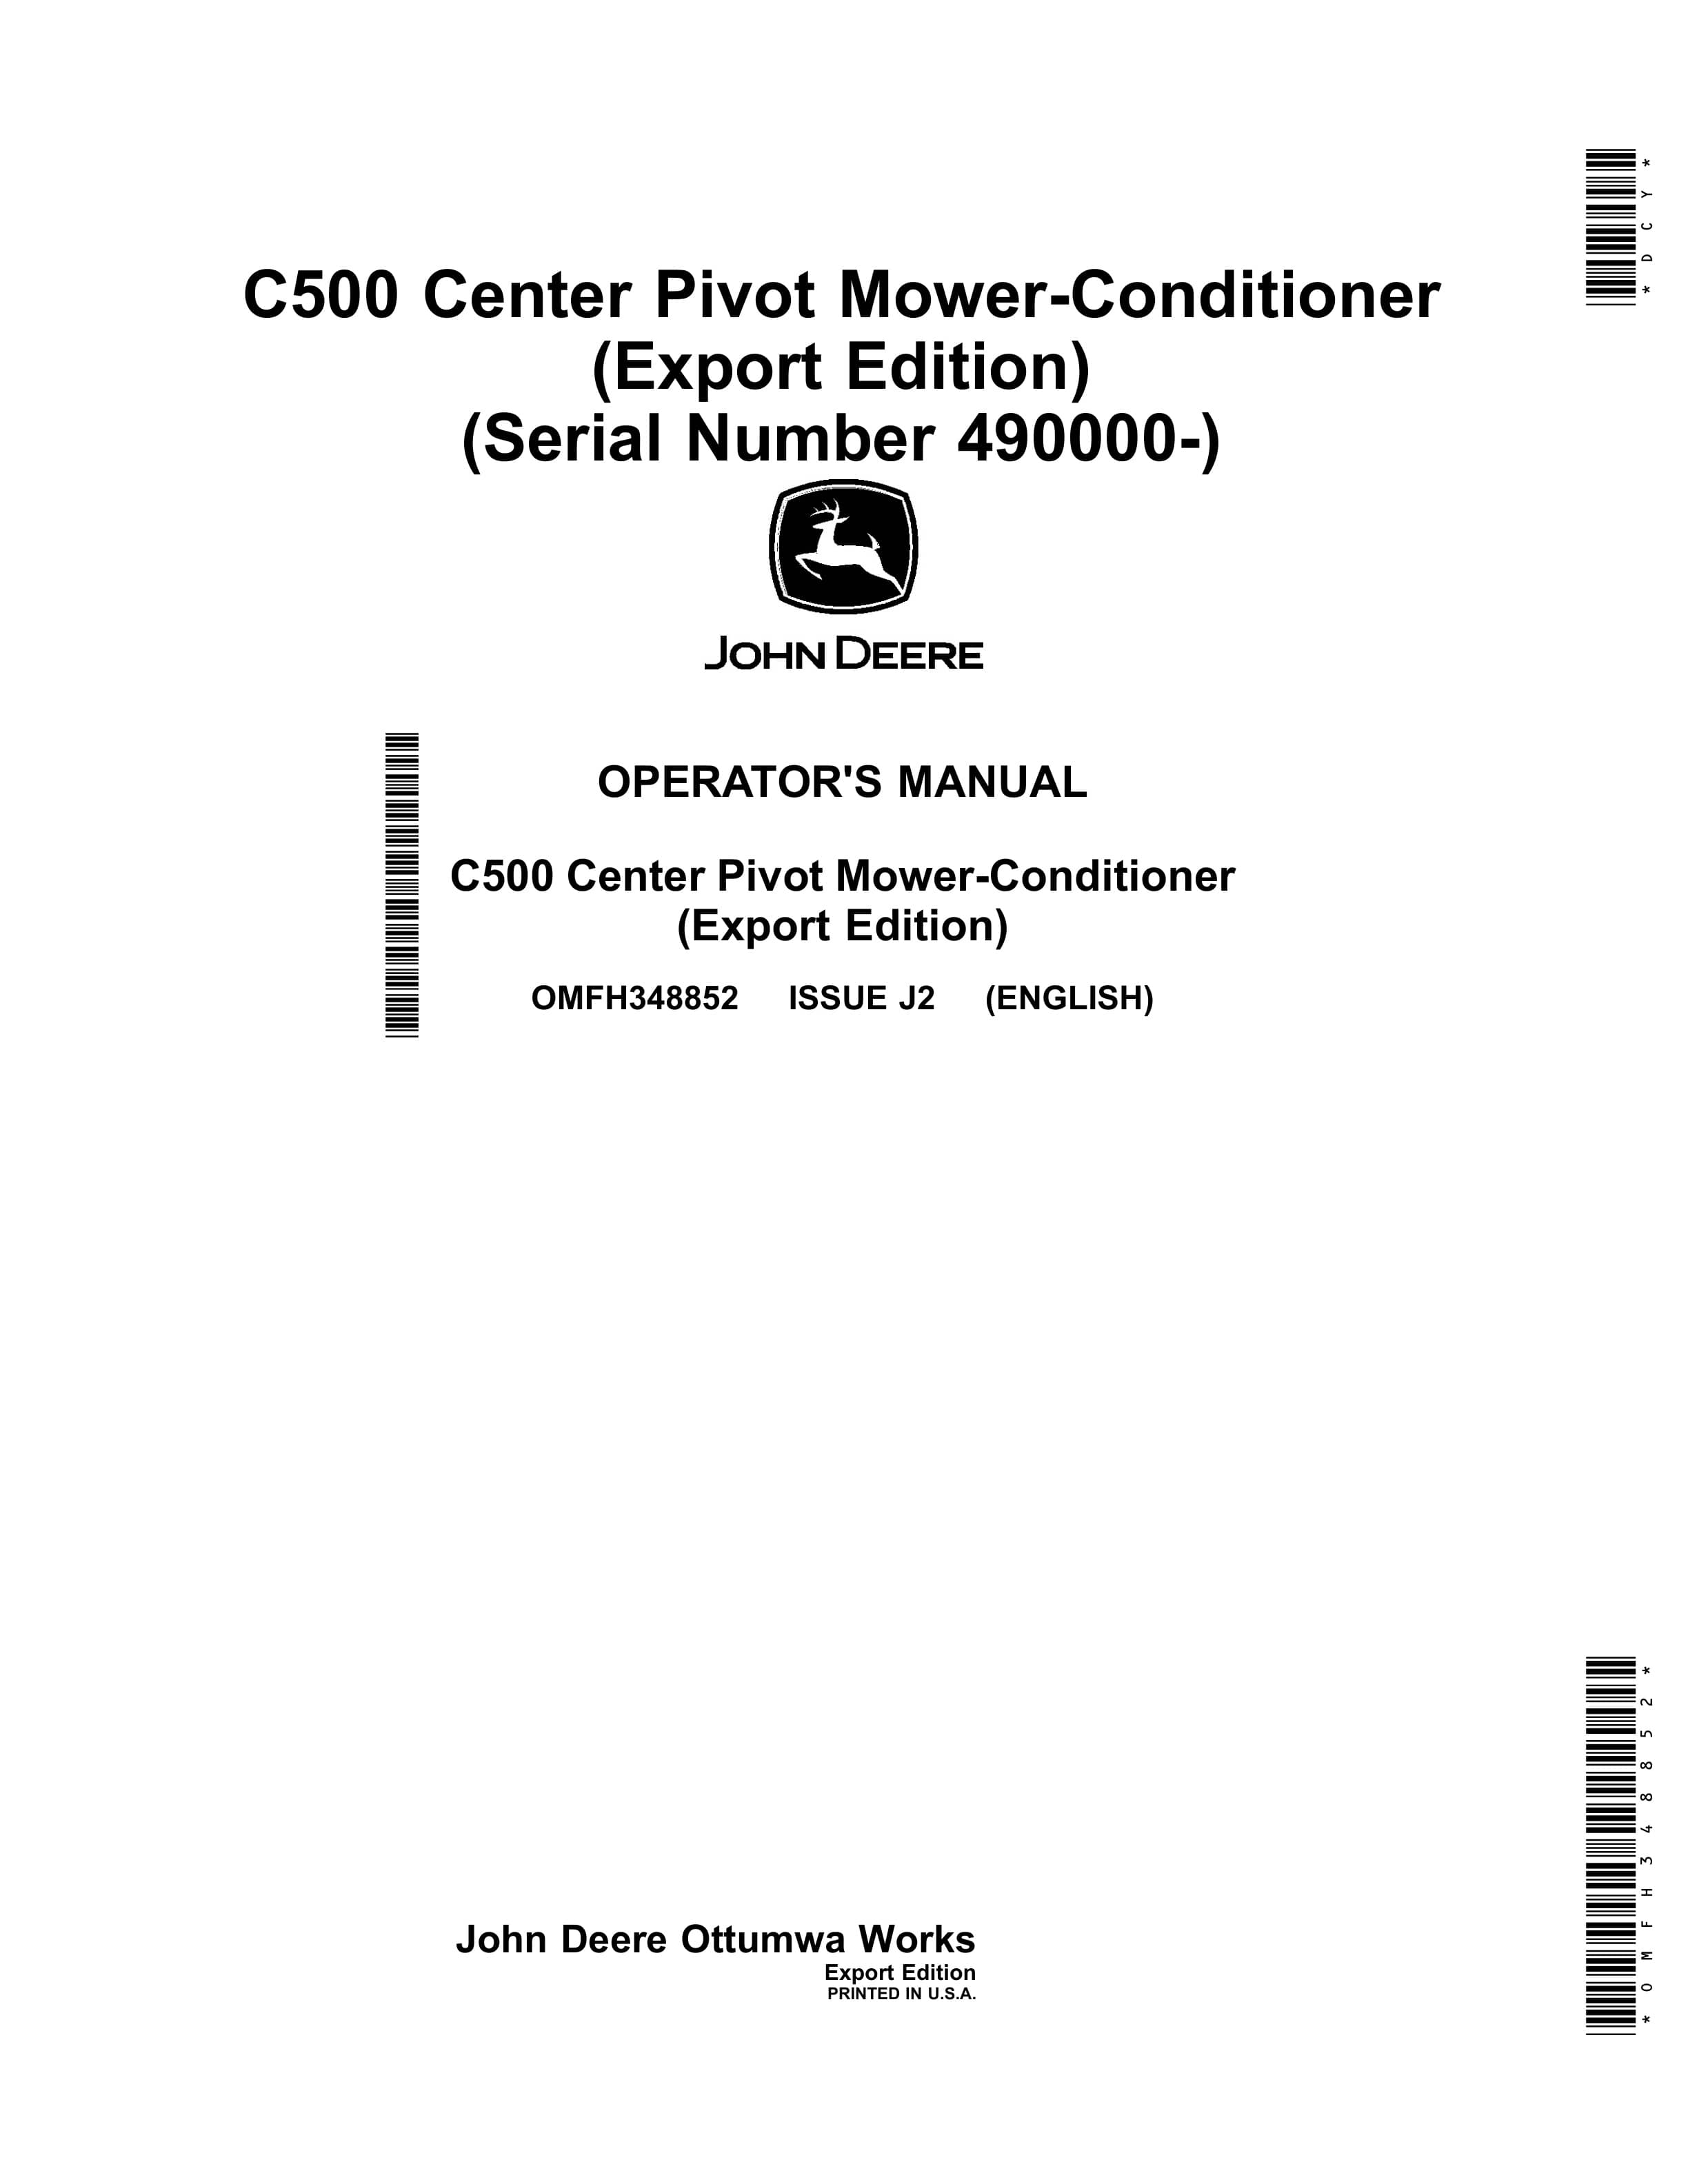 John Deere C500 Center Pivot Mower Conditioner Operator Manual OMFH348852 1